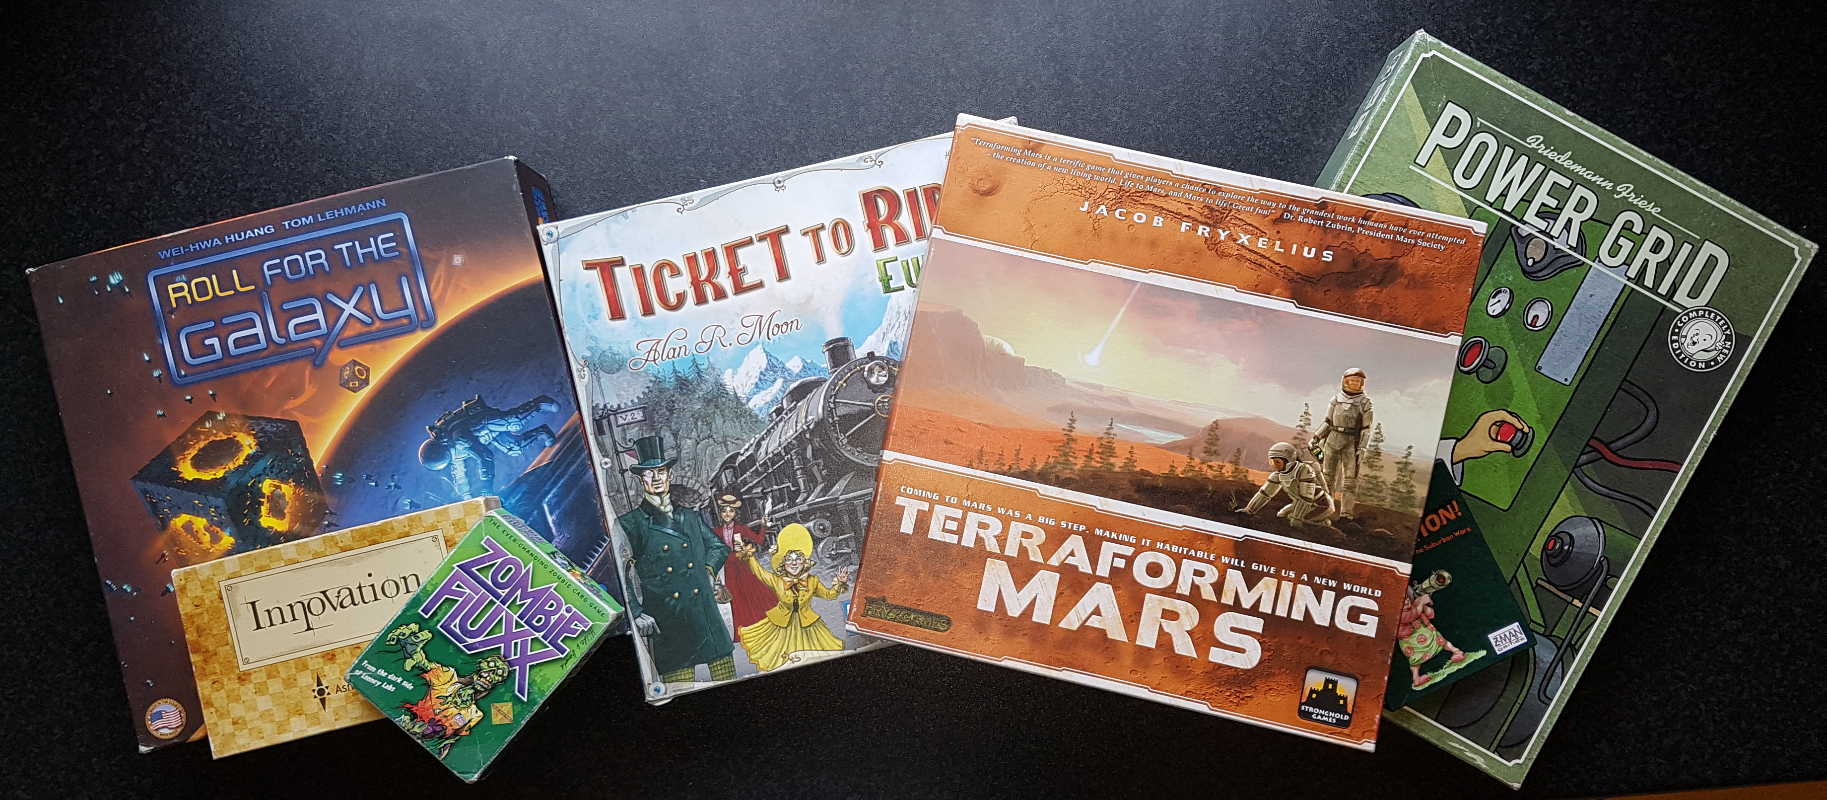 En bunke brettspill: Roll for the Galaxy, Ticket to Ride, Terraforming Mars, Zombie Flux, Innovation og Power Grid